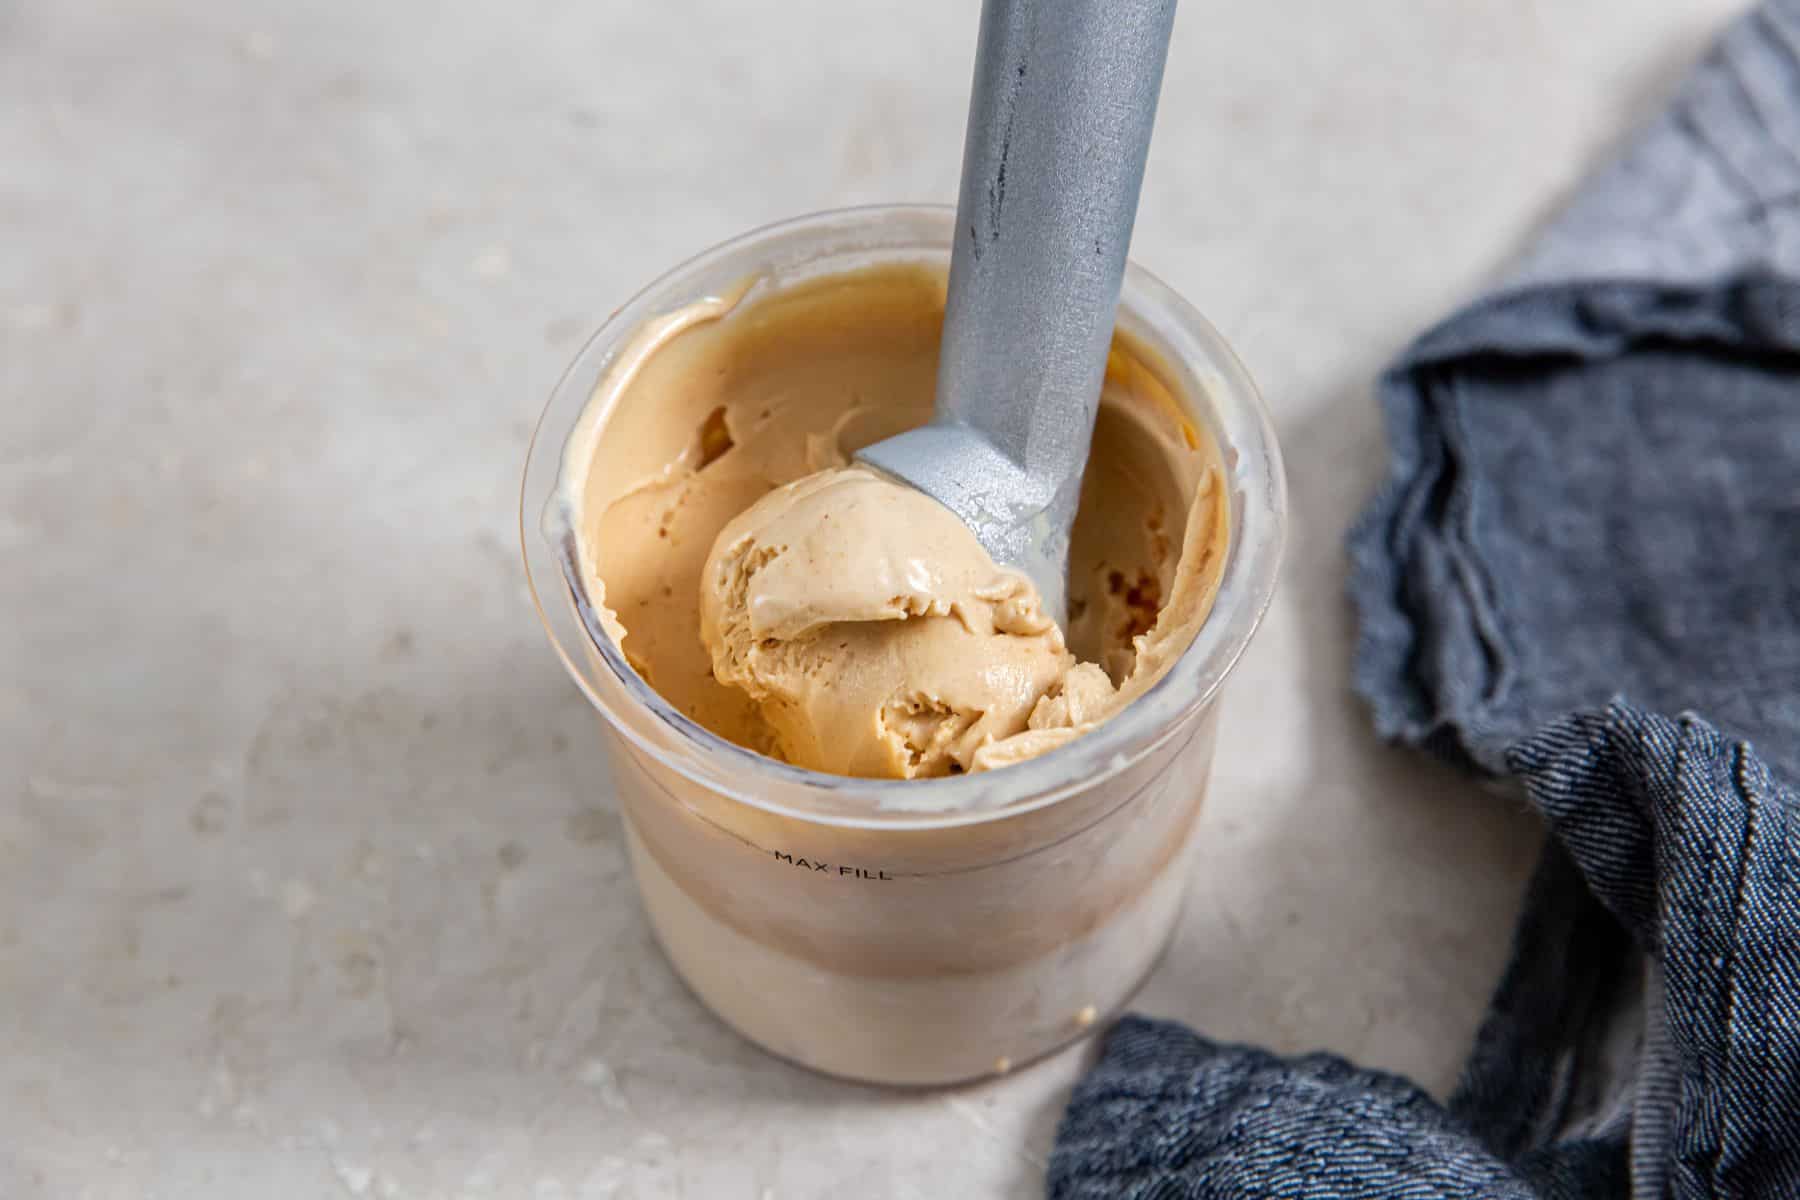 Ninja Creami Peanut Butter Ice Cream in a glass jar with an ice cream scooper.